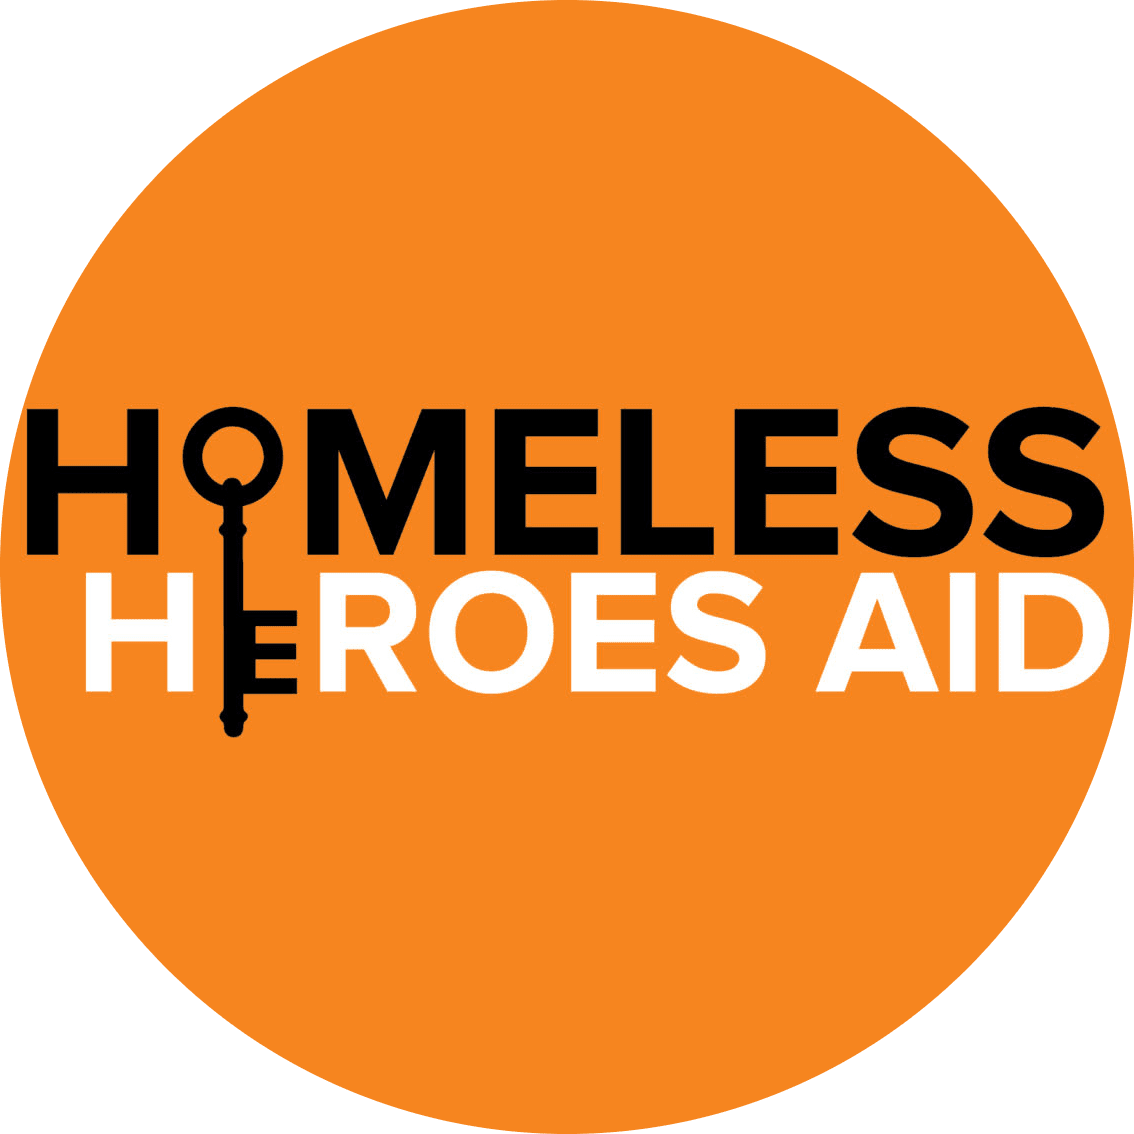 Homeless Heroes Aid CIC